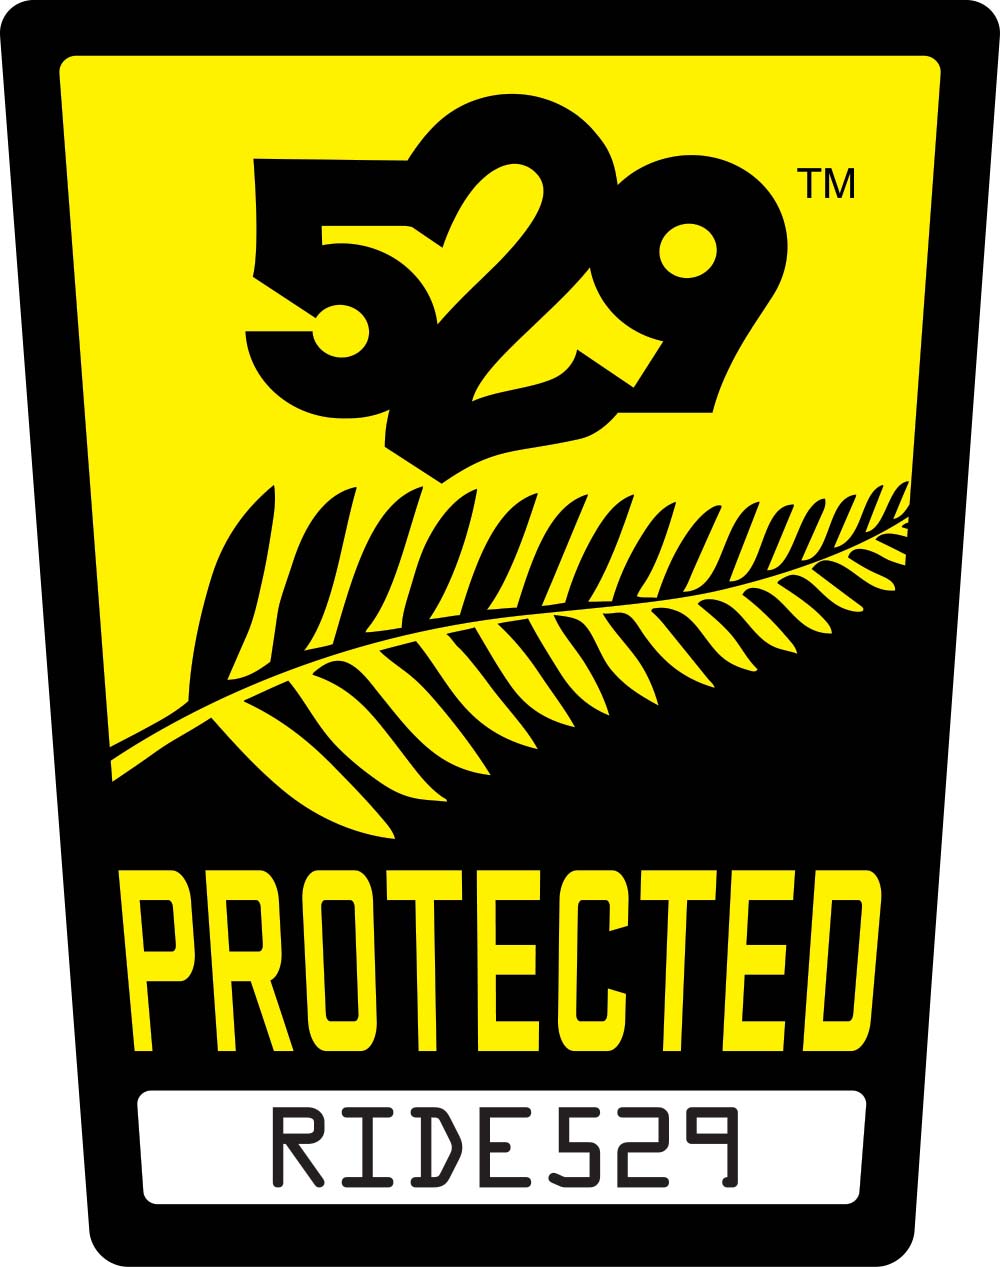 529 Shield (529 Garage Bicycle Registration Kit - New Zealand Edition)